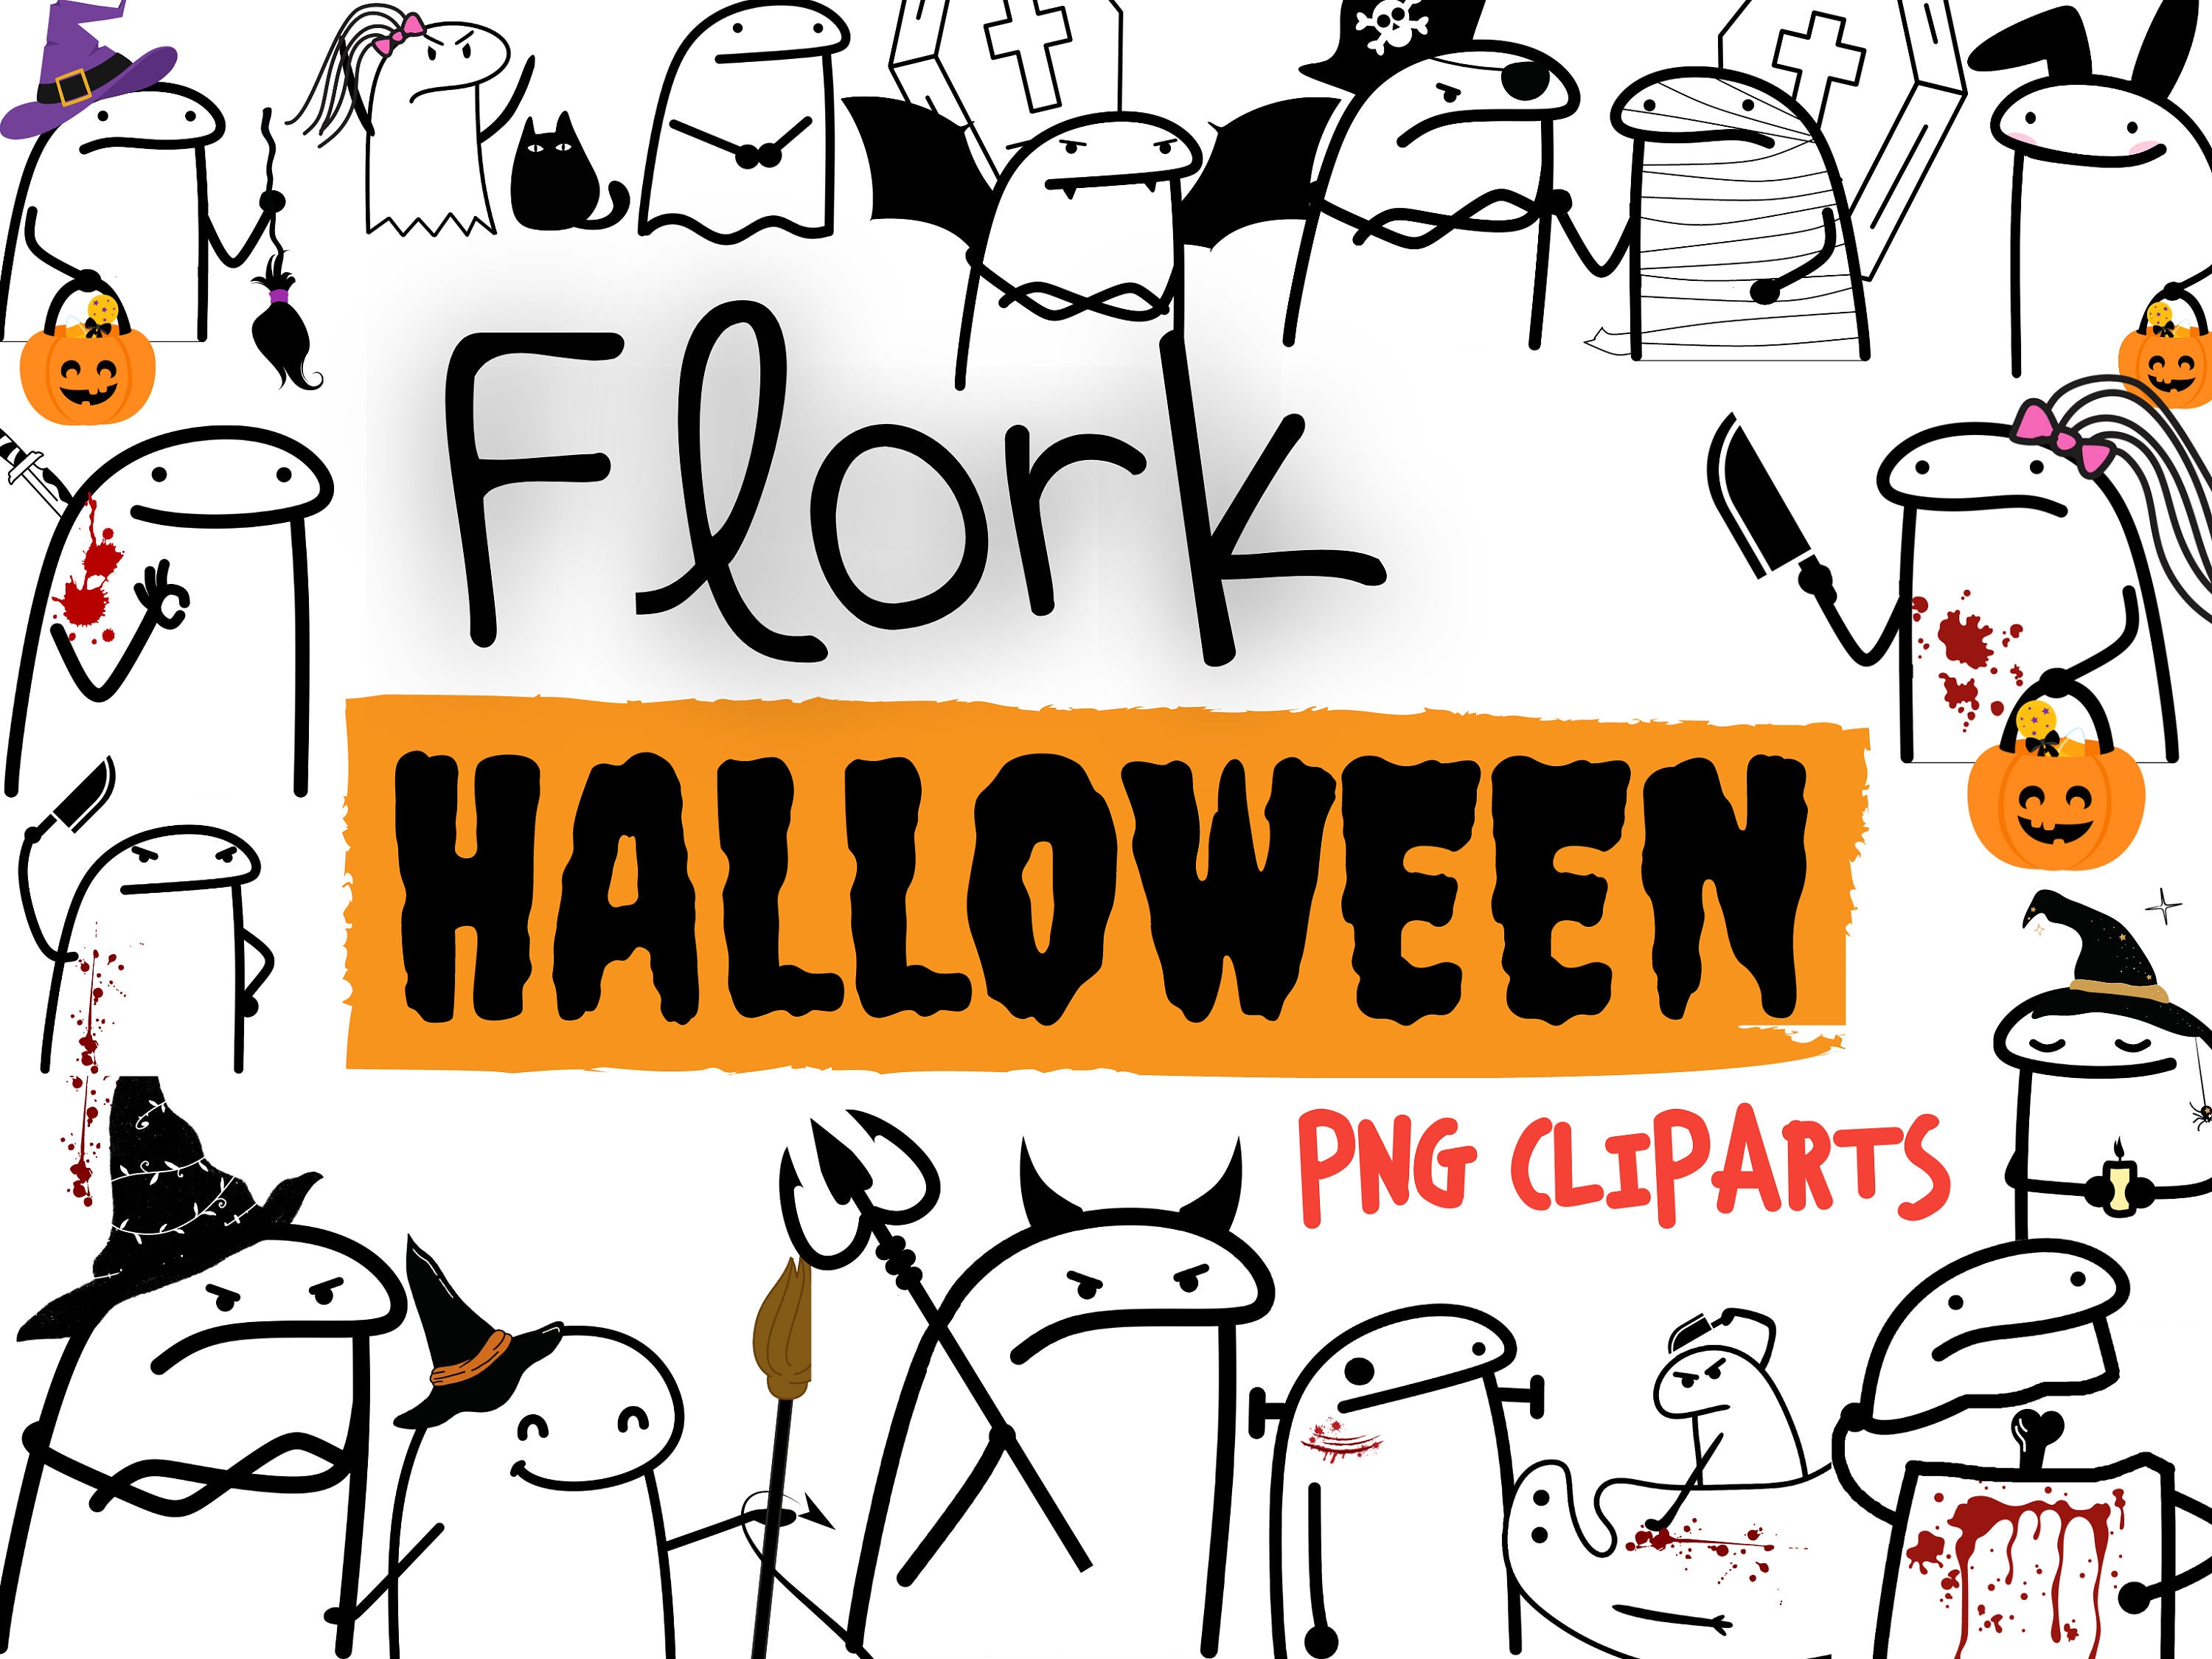 Florks meme Halloween Night Sticker by DGVO